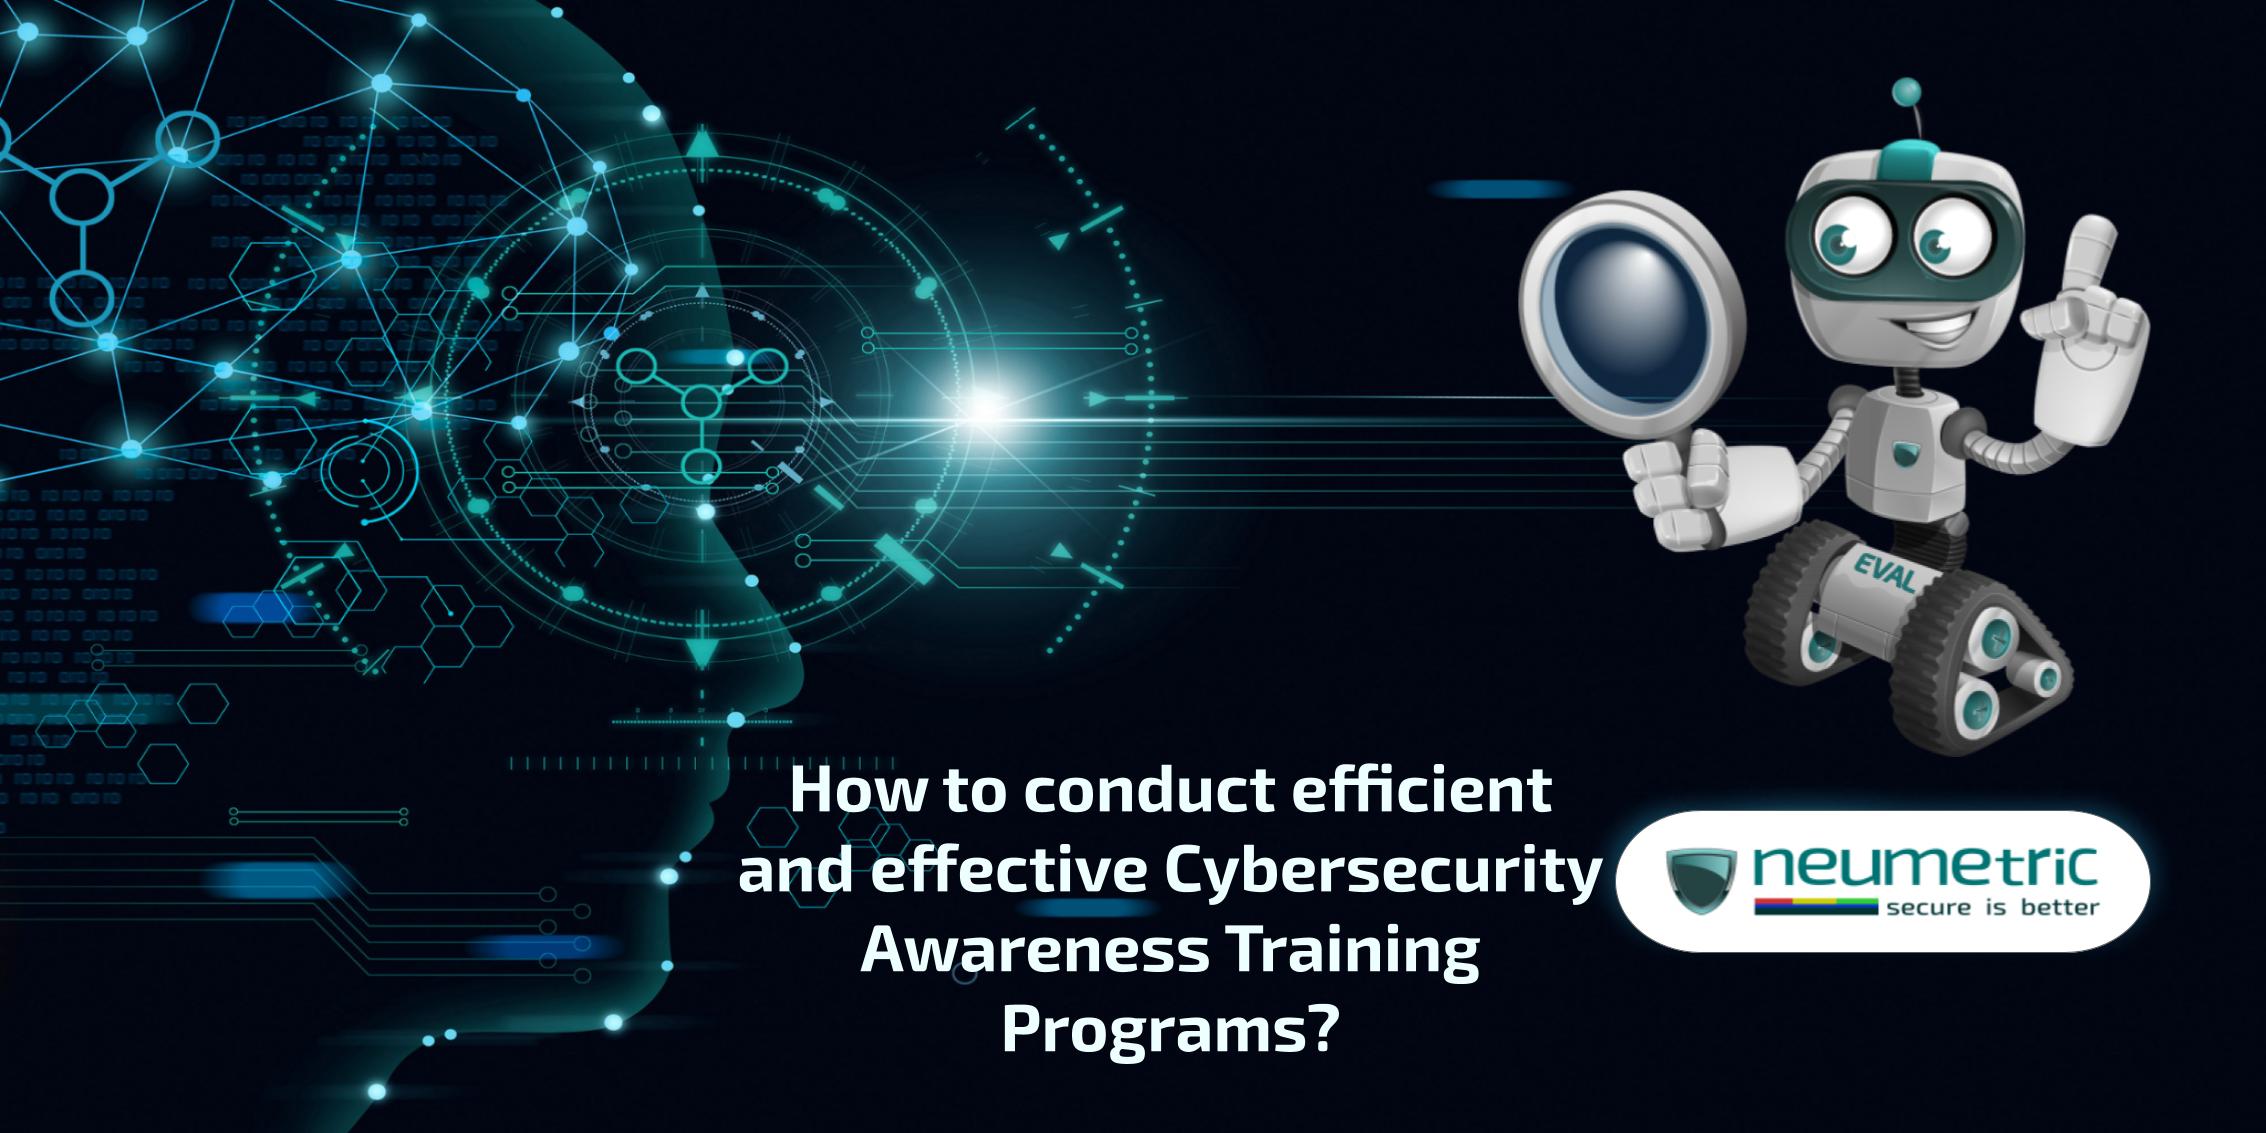 Cybersecurity awareness training programs